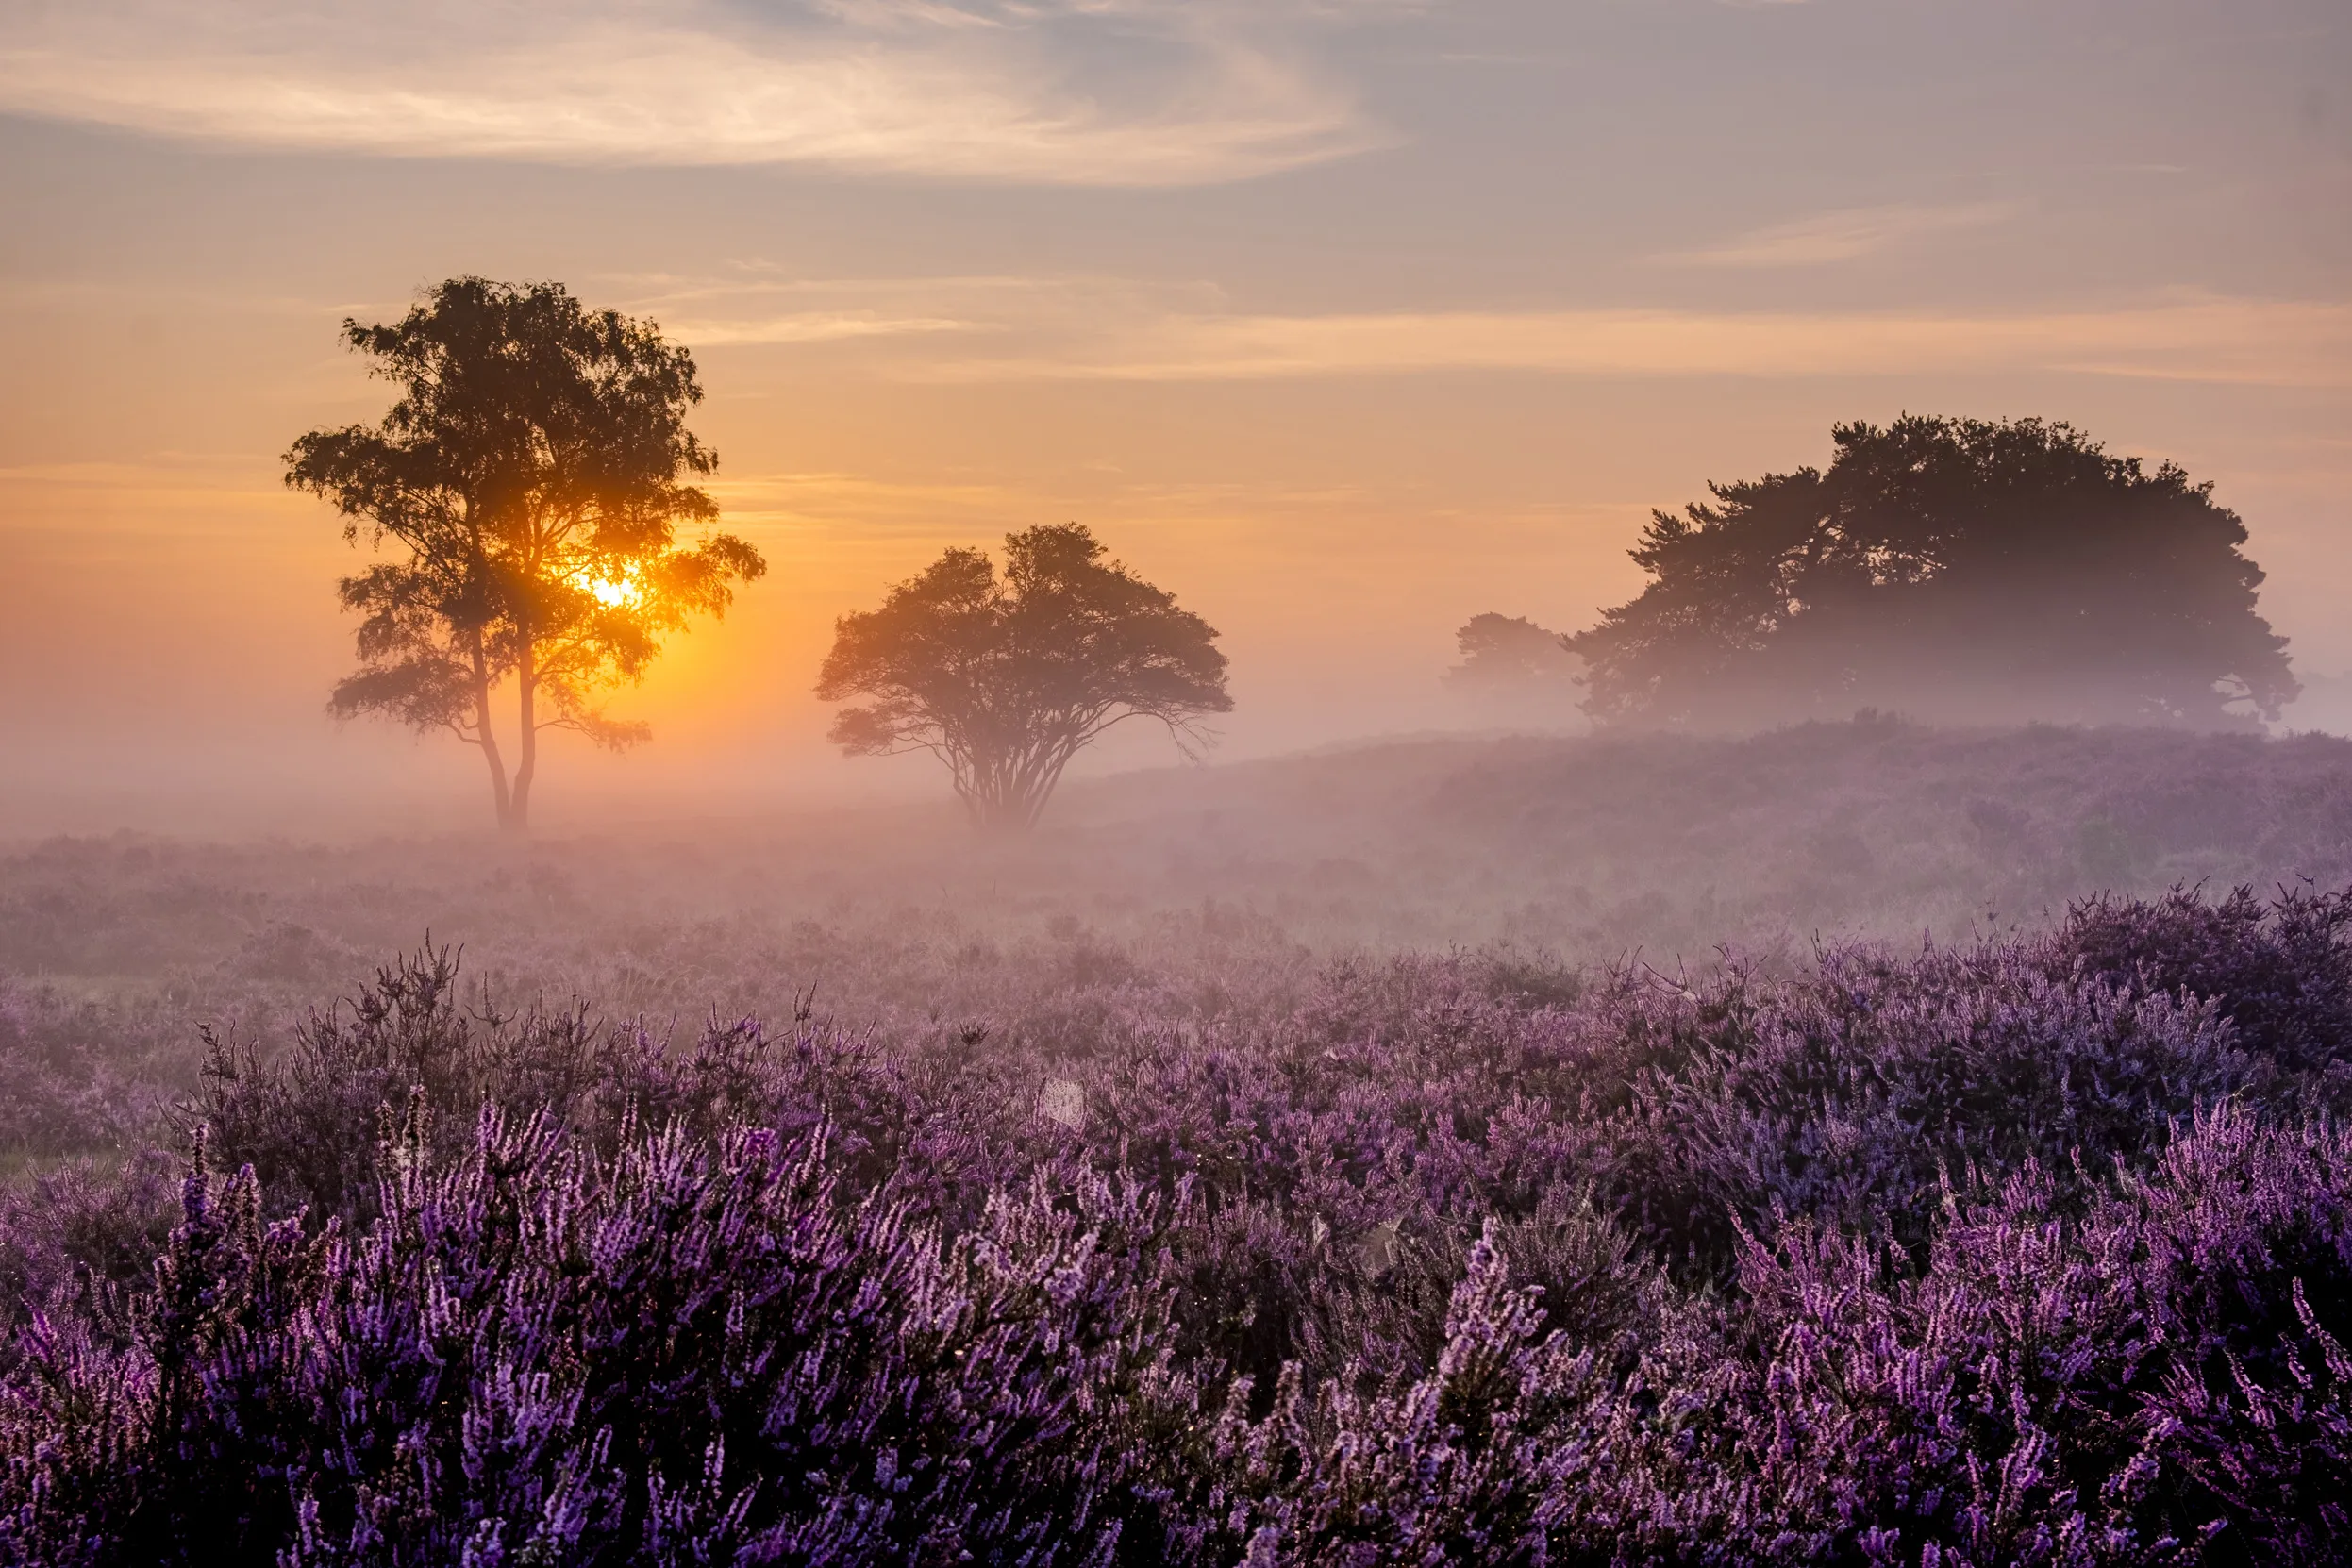 A heathland of purple heather in a sunset mist.